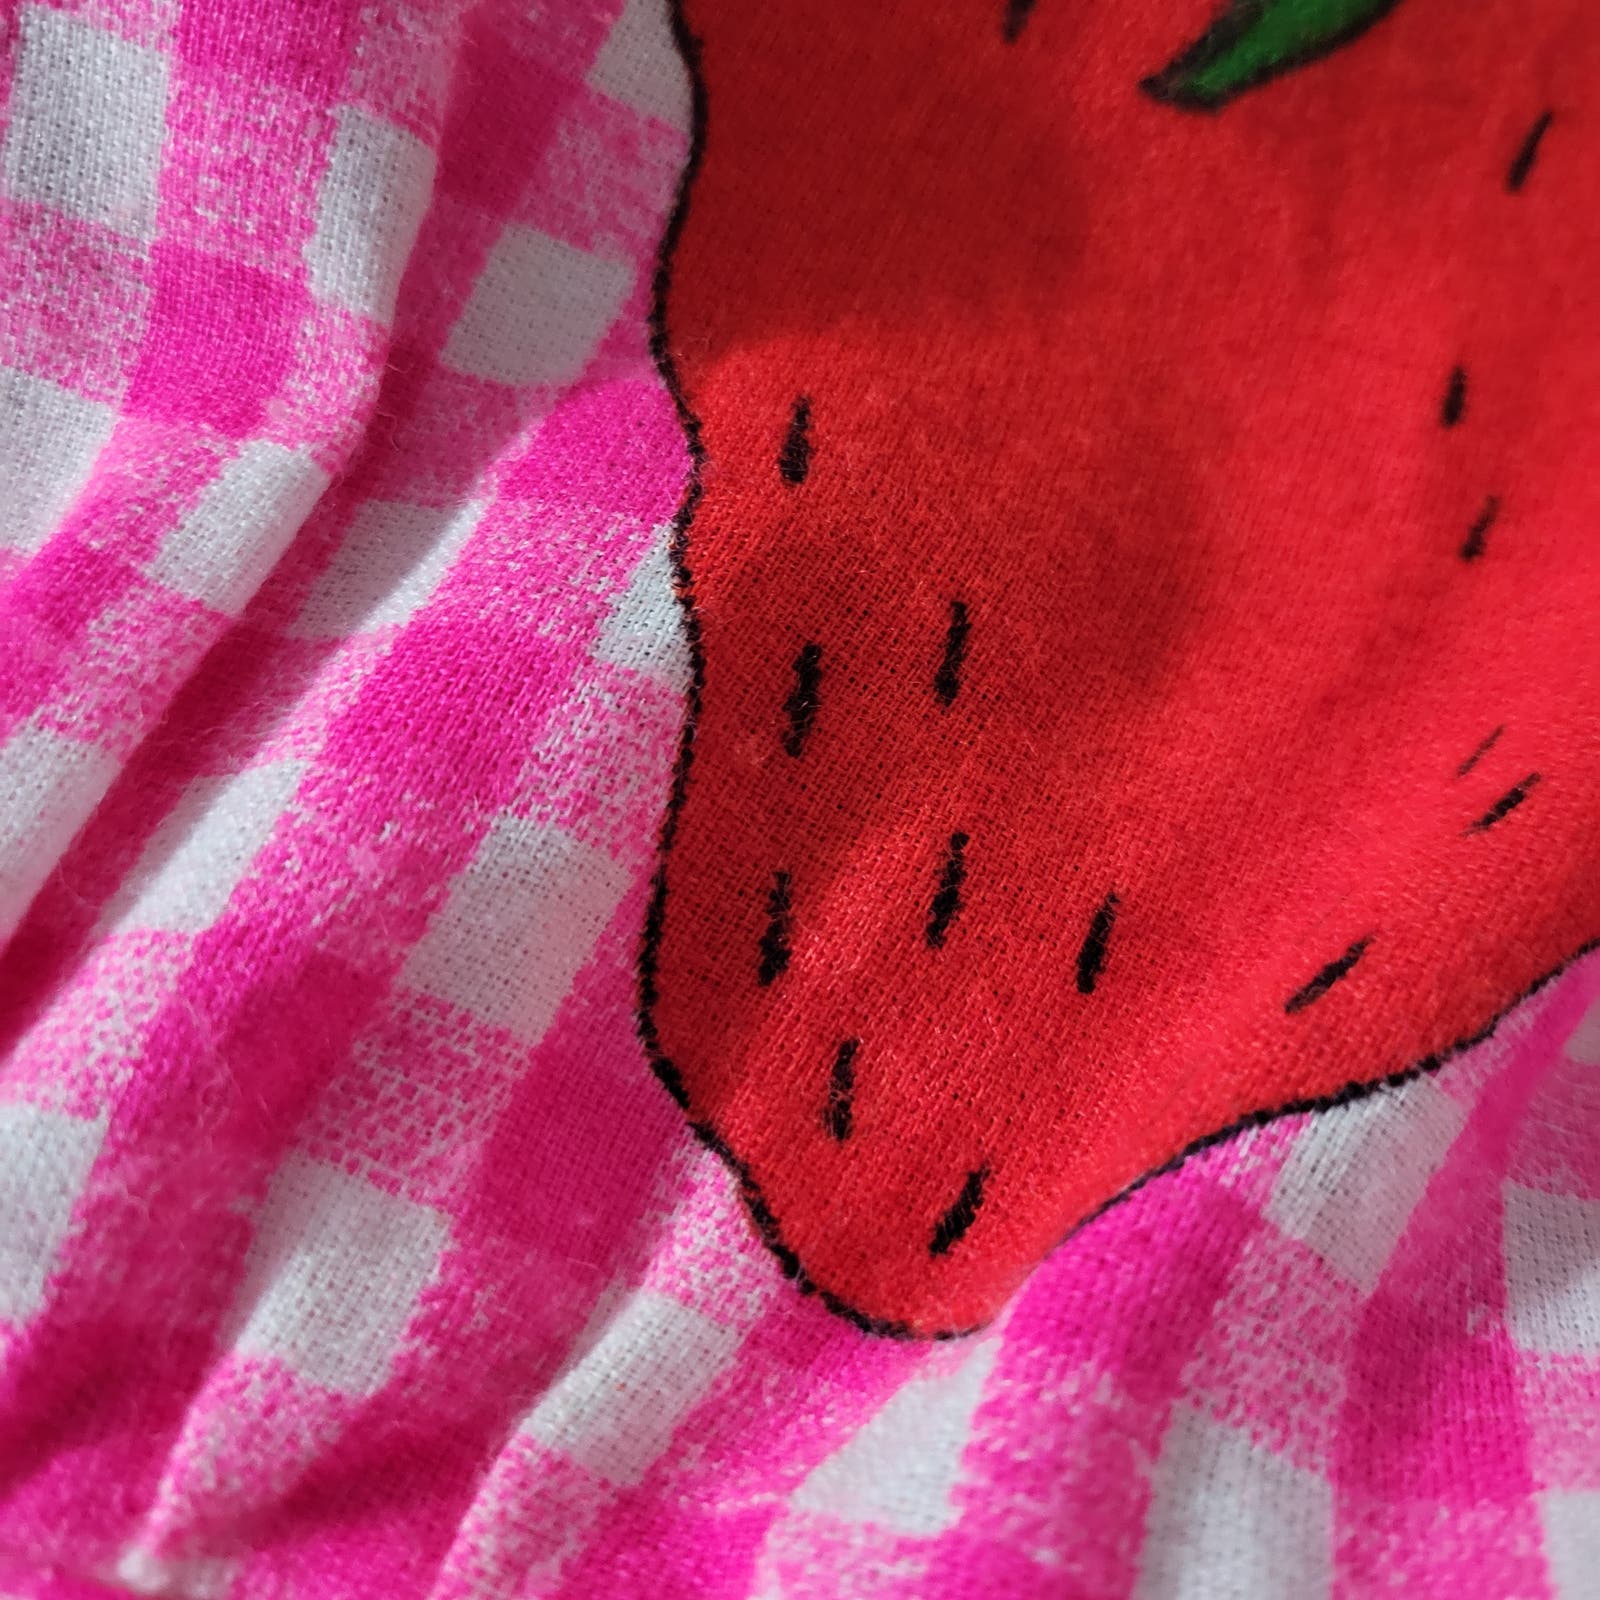 Vintage Herman Geist Skirt Pink Gingham Red Strawberry Print Maxi Ruffle Tier Folk Art Size XXS